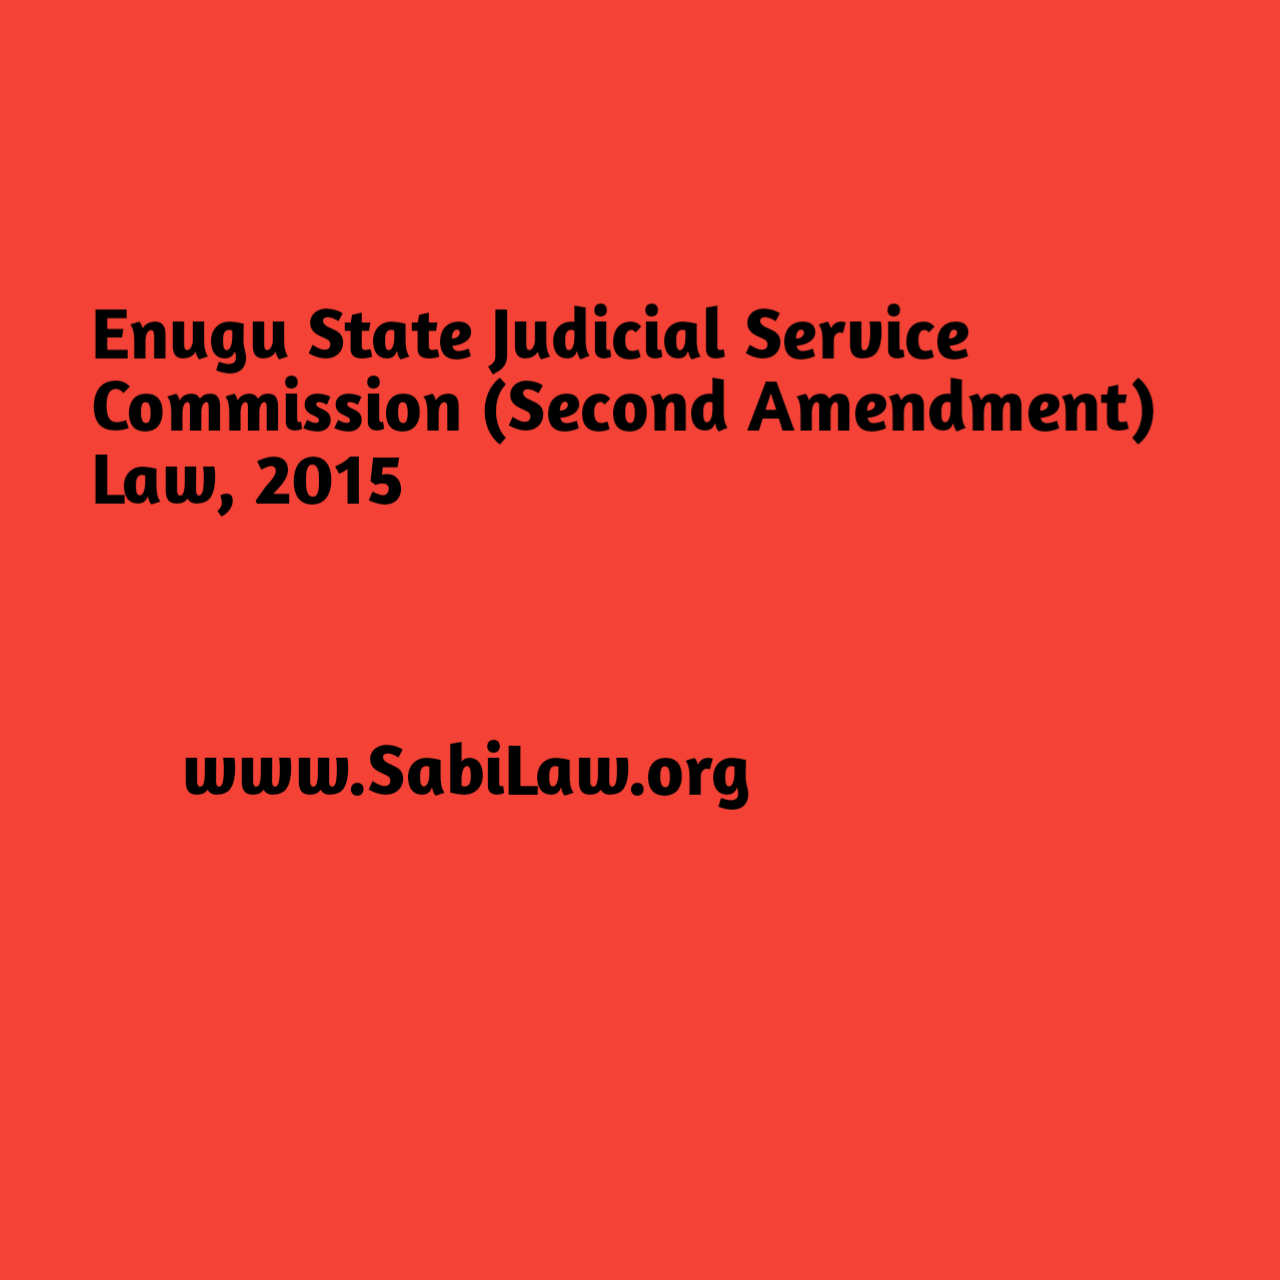 Enugu State Judicial Service Commission (Second Amendment) Law, 2015